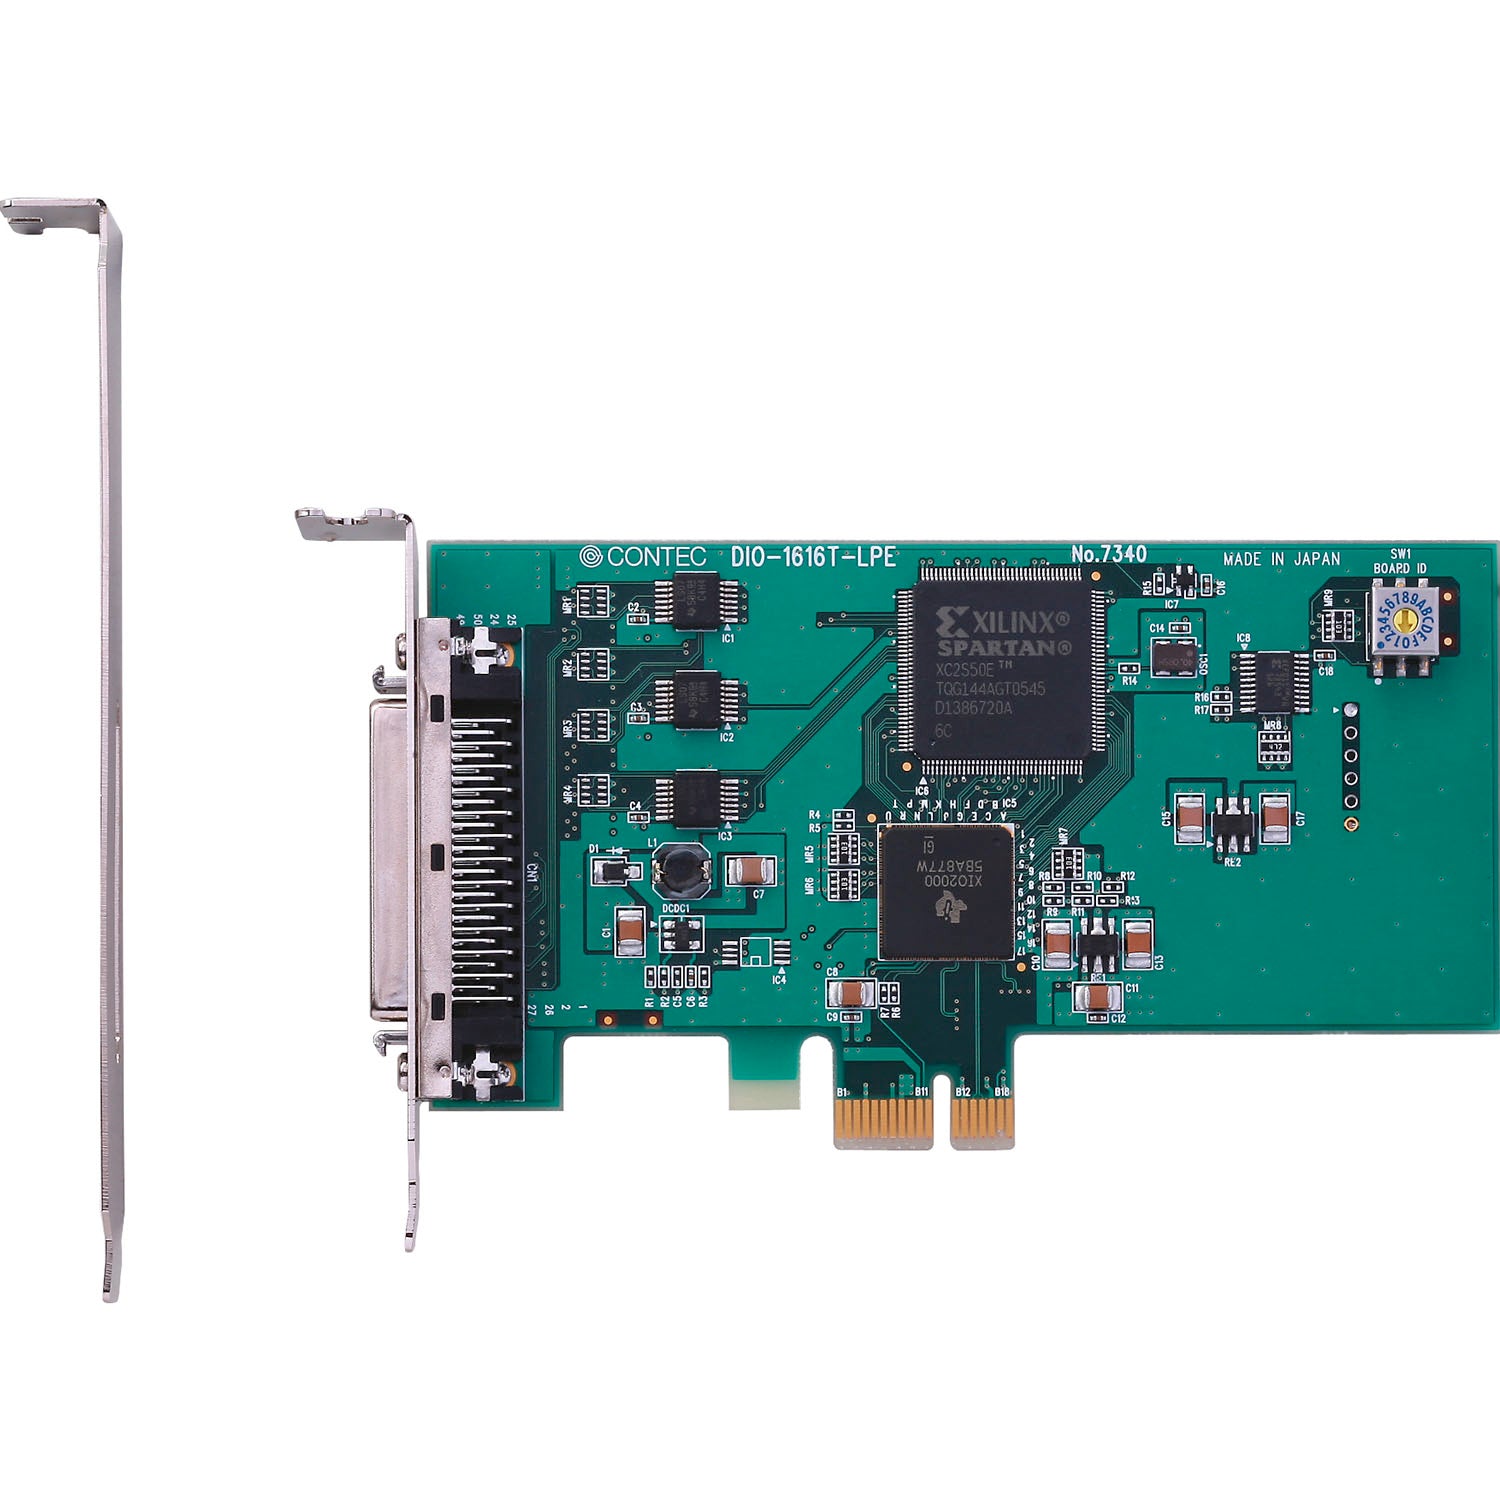 DIO-1616T-LPE Digital I/O Low Profile PCI Express card